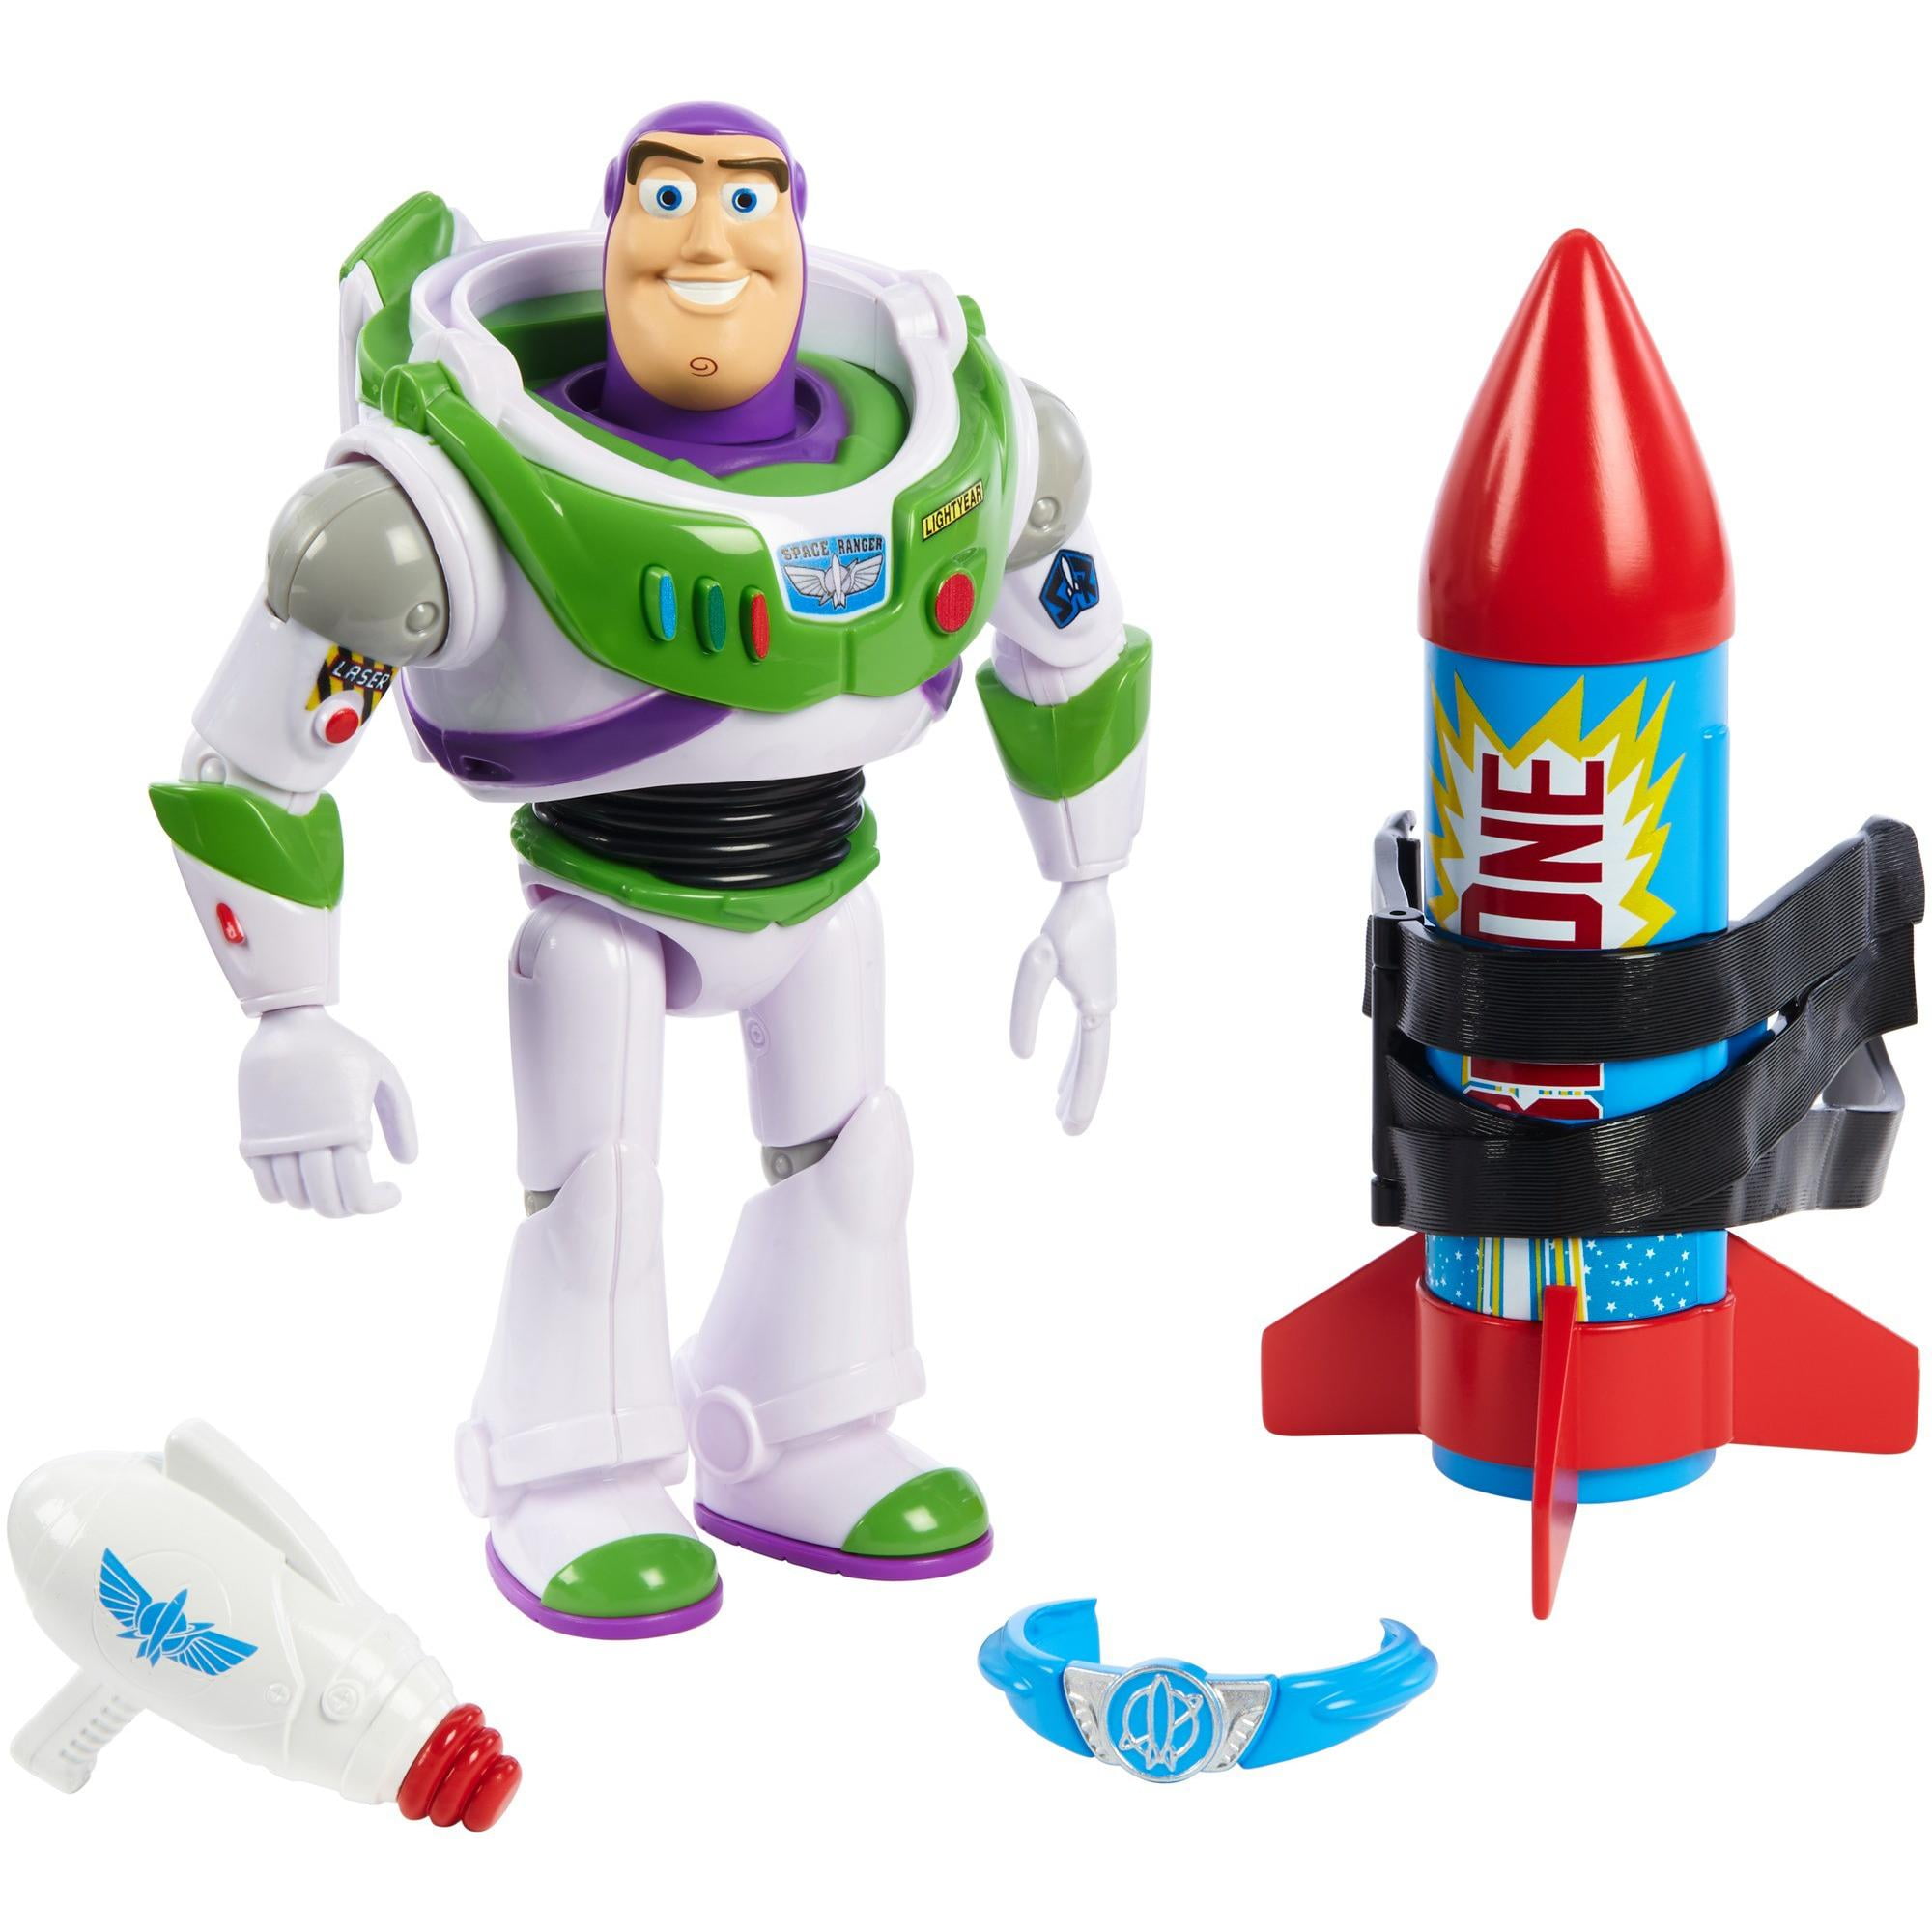 Details about   Disney Pixar Toy Story 4 Buzz Lightyear 